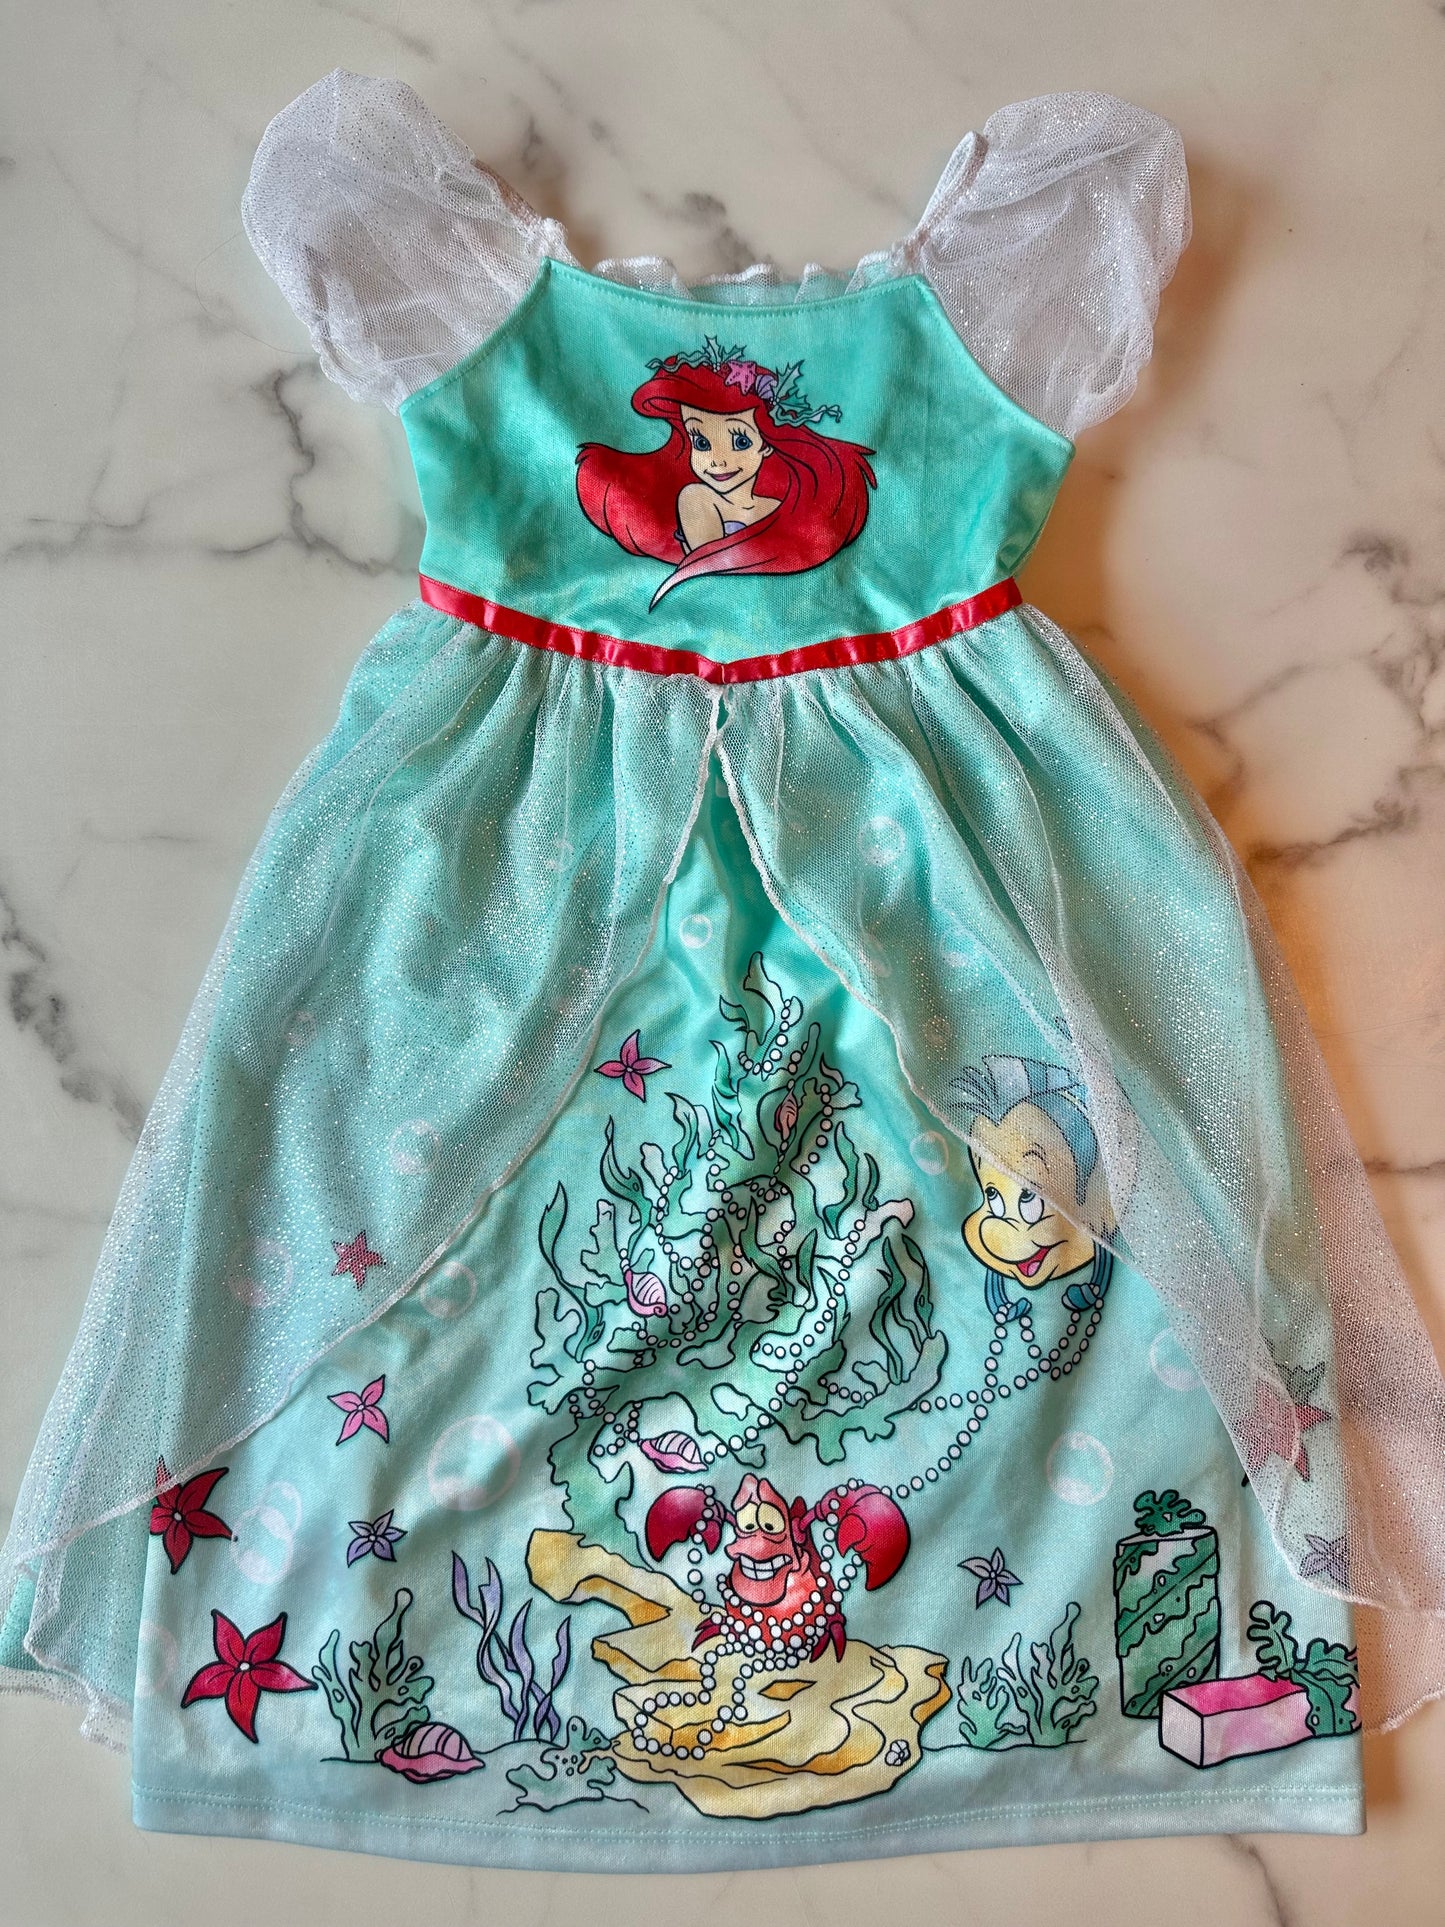 Disney Ariel The Little Mermaid pajama dress 2T